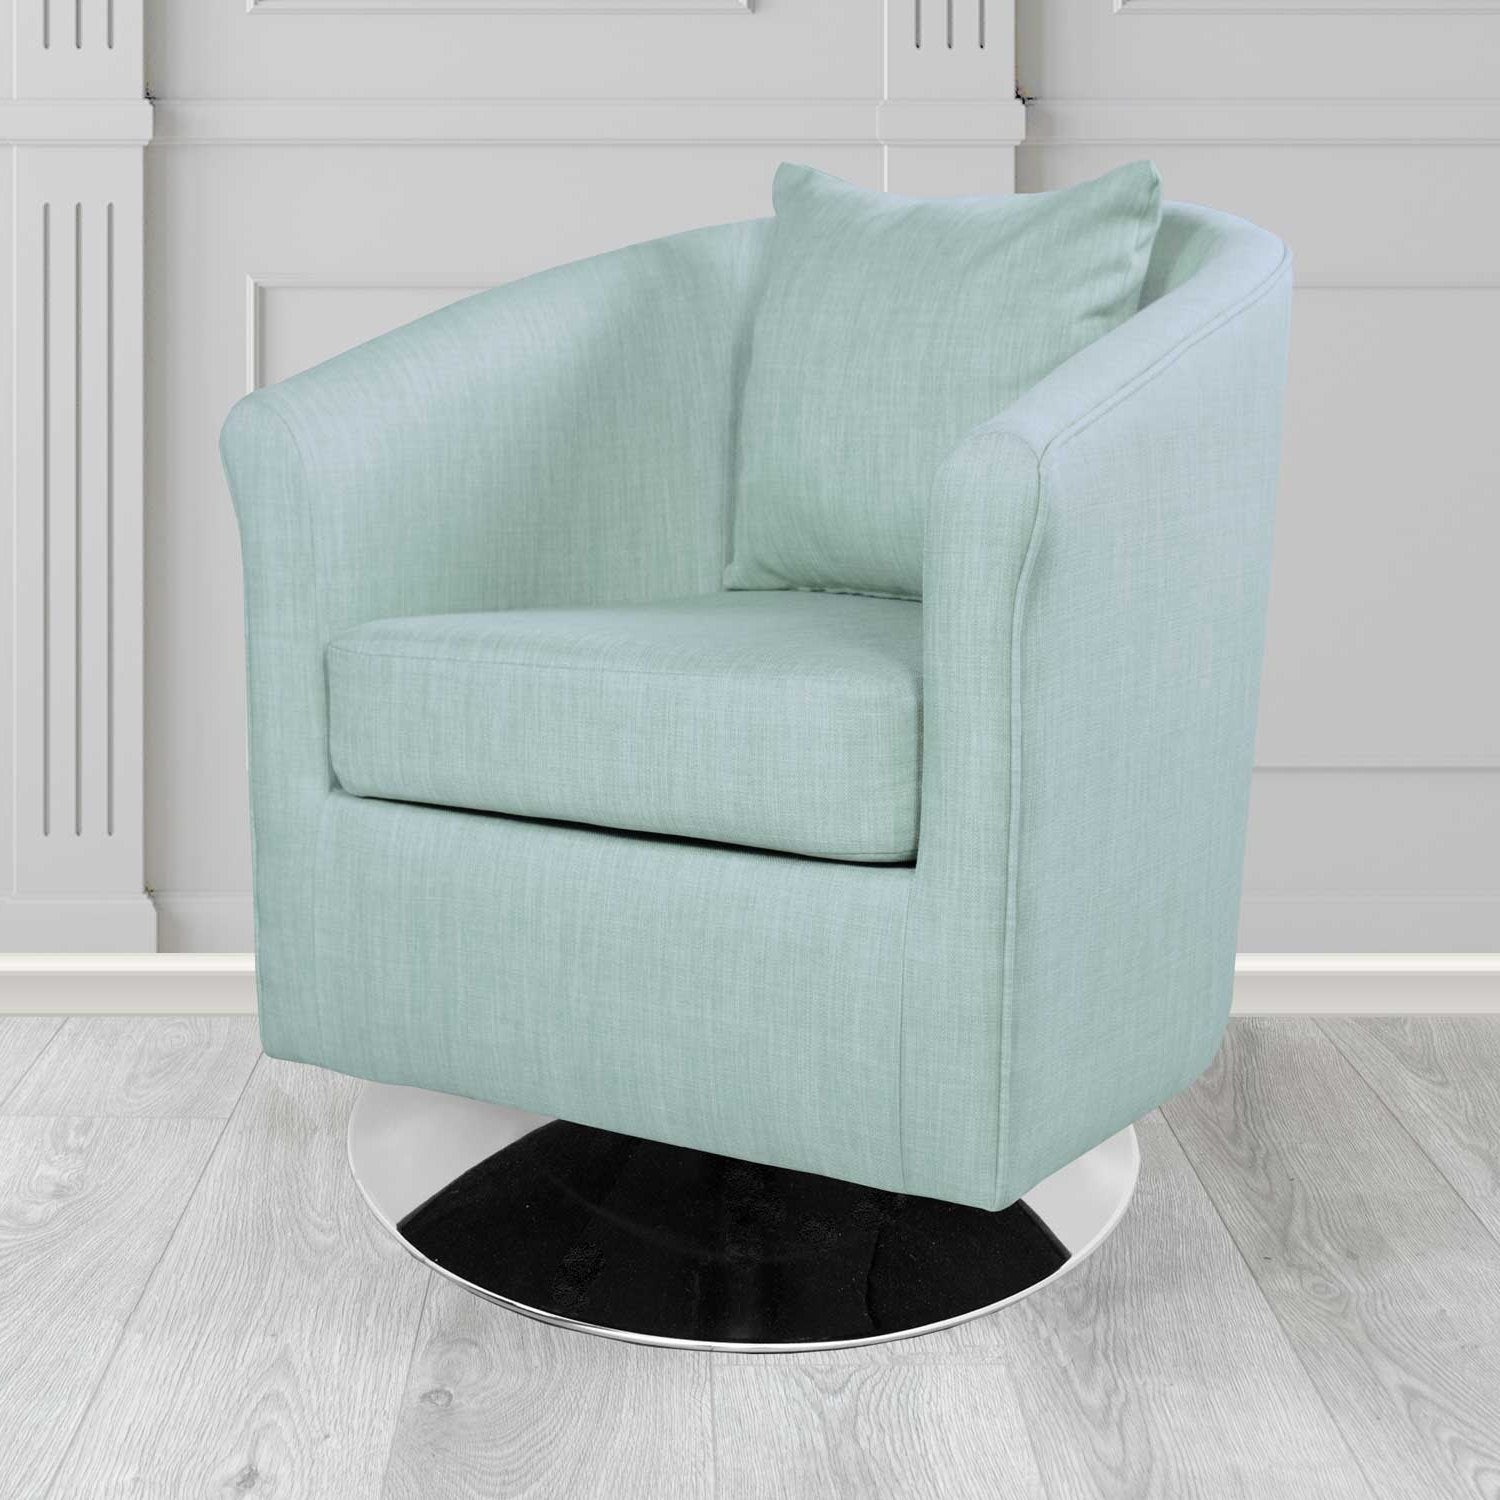 St Tropez Charles Sky Plain Linen Fabric Swivel Tub Chair - The Tub Chair Shop